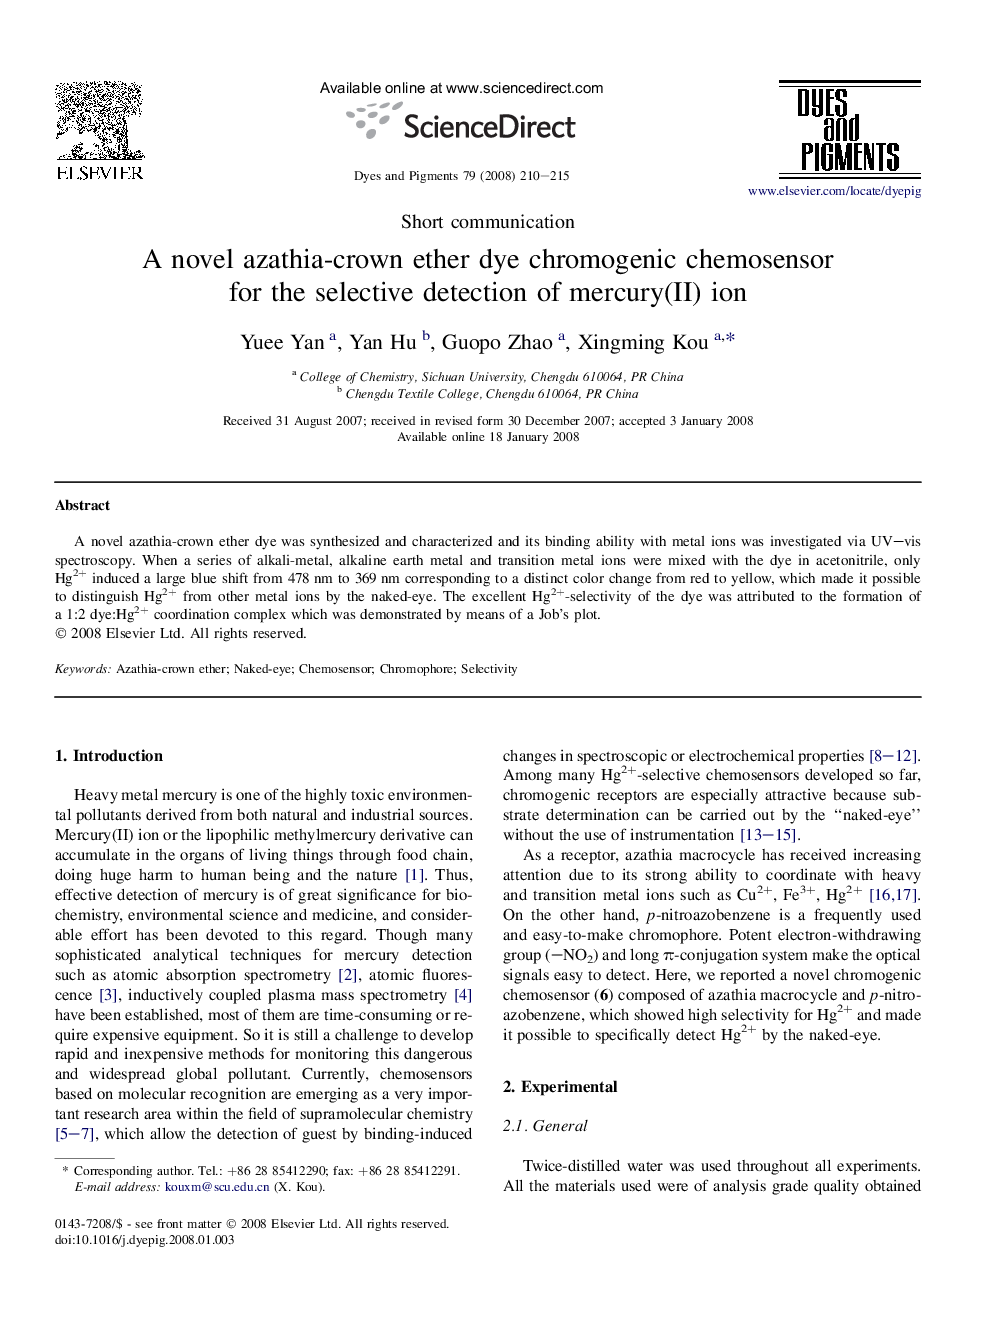 A novel azathia-crown ether dye chromogenic chemosensor for the selective detection of mercury(II) ion